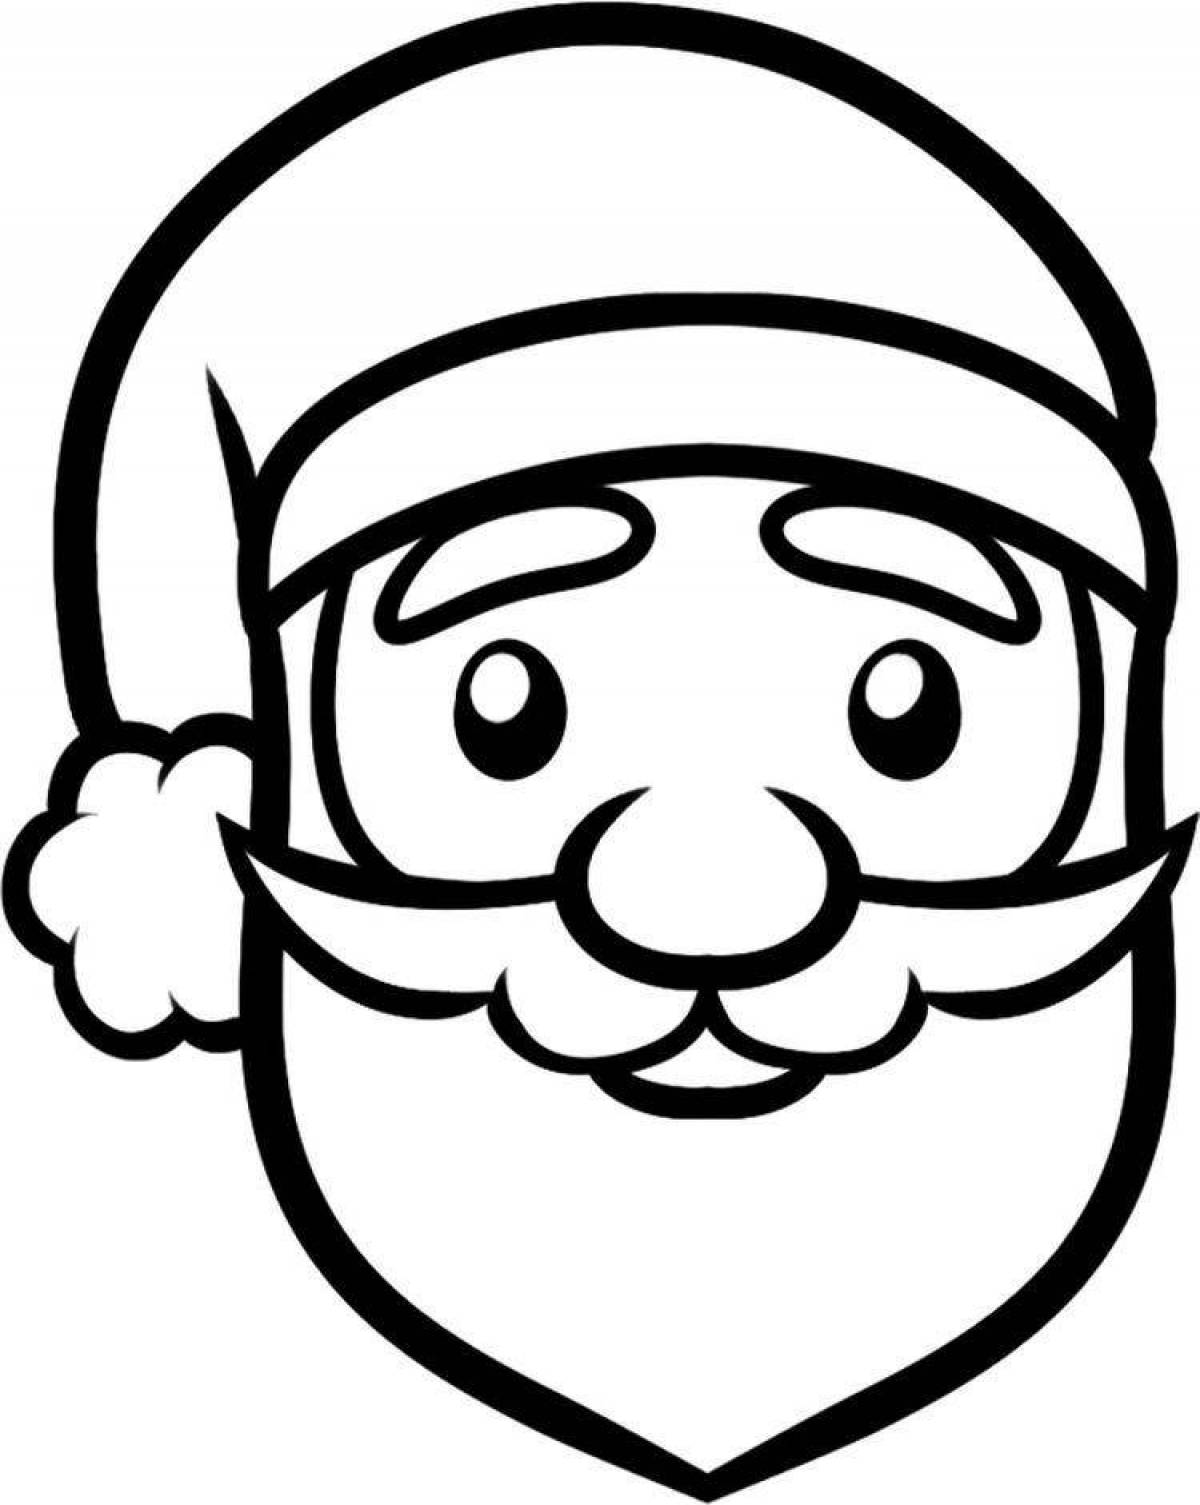 Funny santa face coloring page